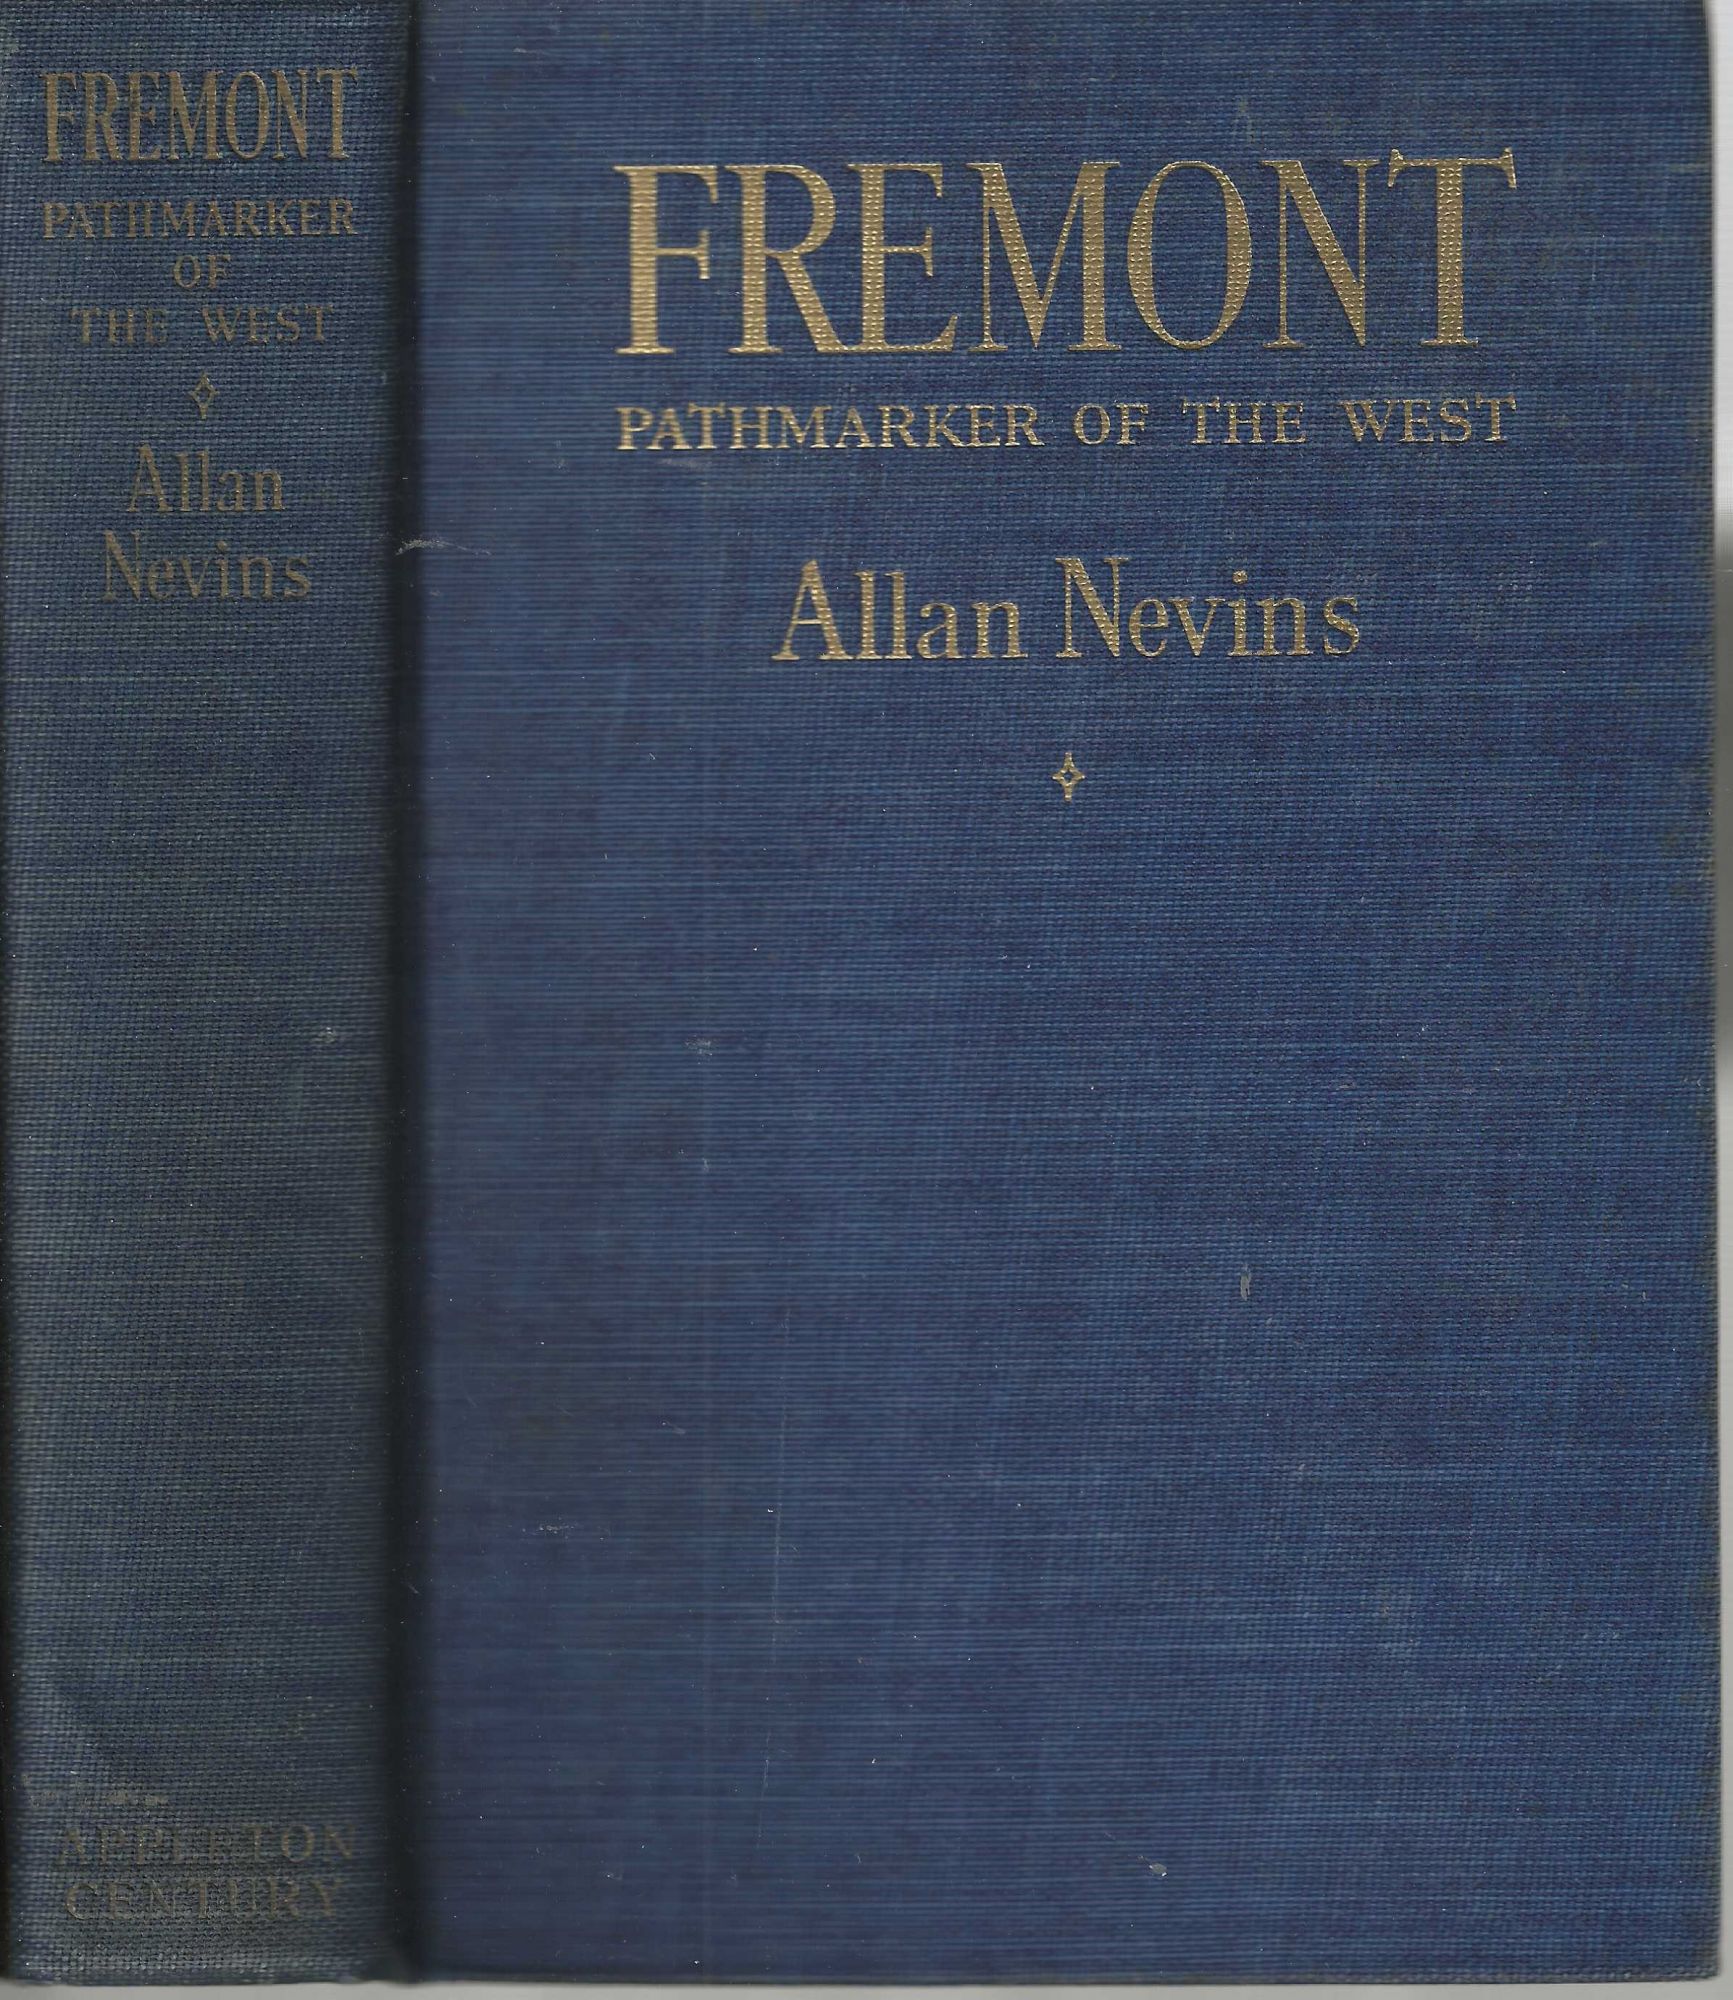 Allan Nevins' Civil War, History